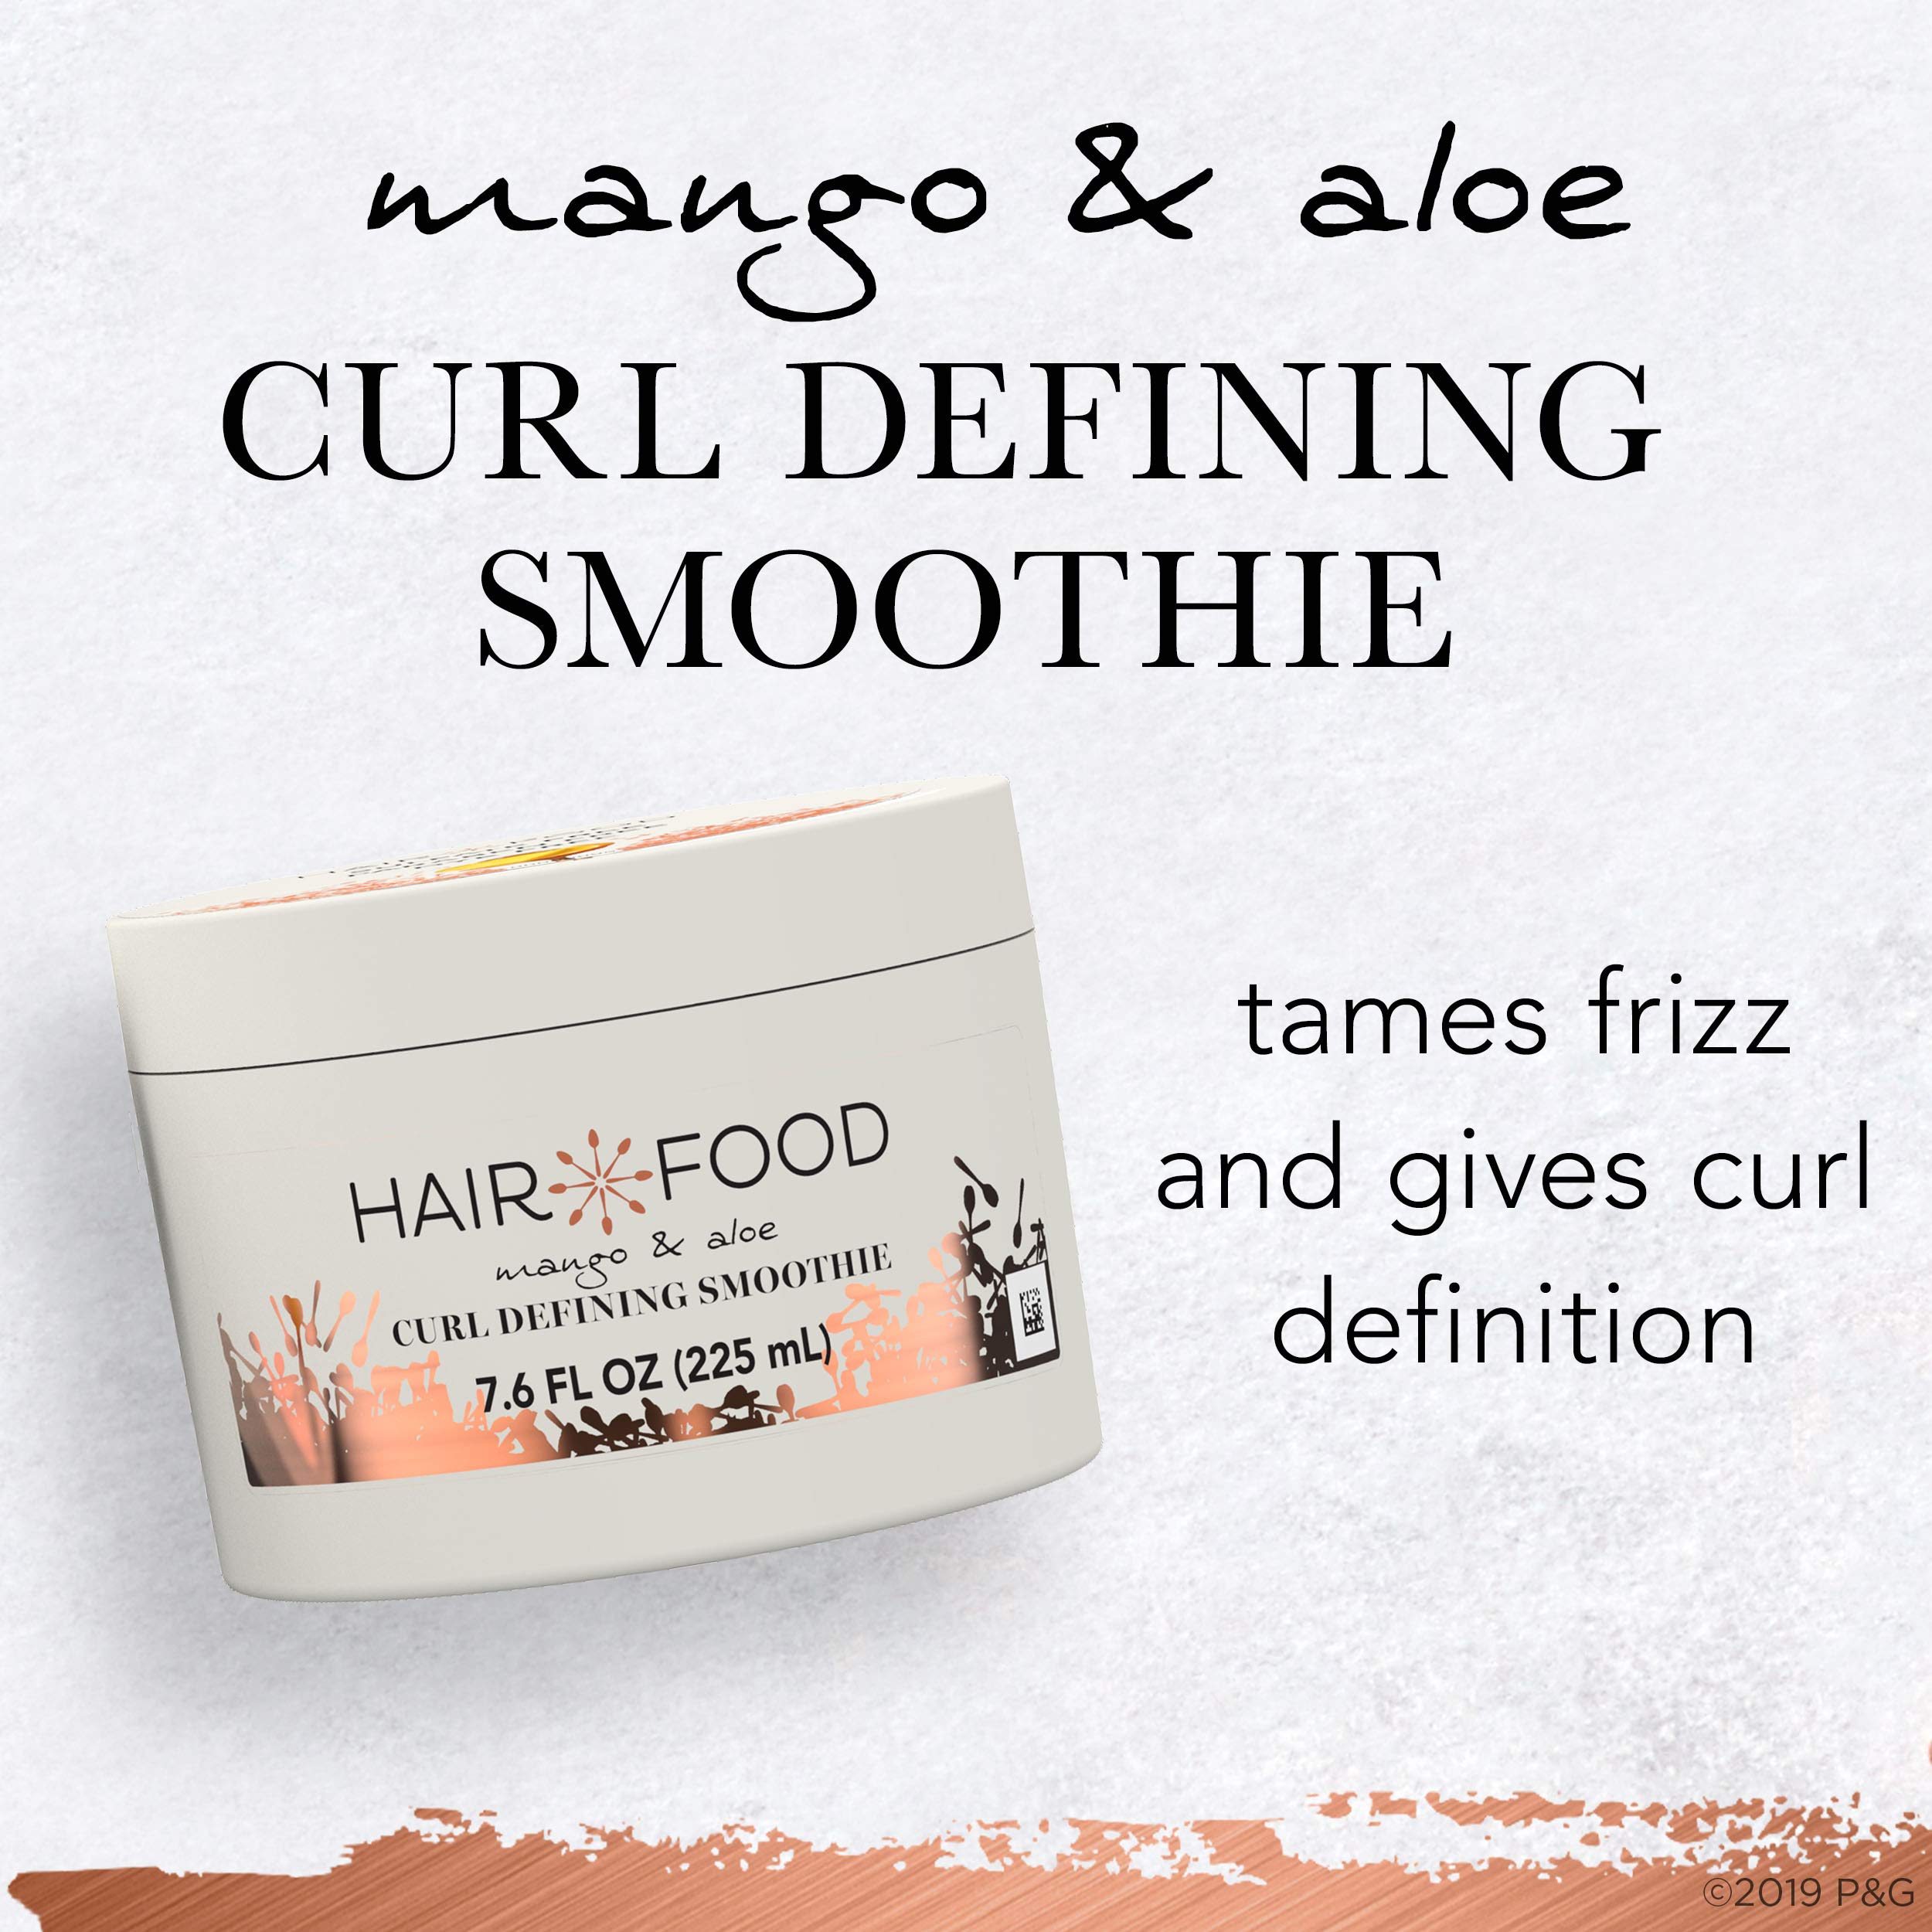 Hair Food Mango & Aloe Curl Cream, Defining Smoothie, White, Mango-Aloe, 7.6 Fl Oz